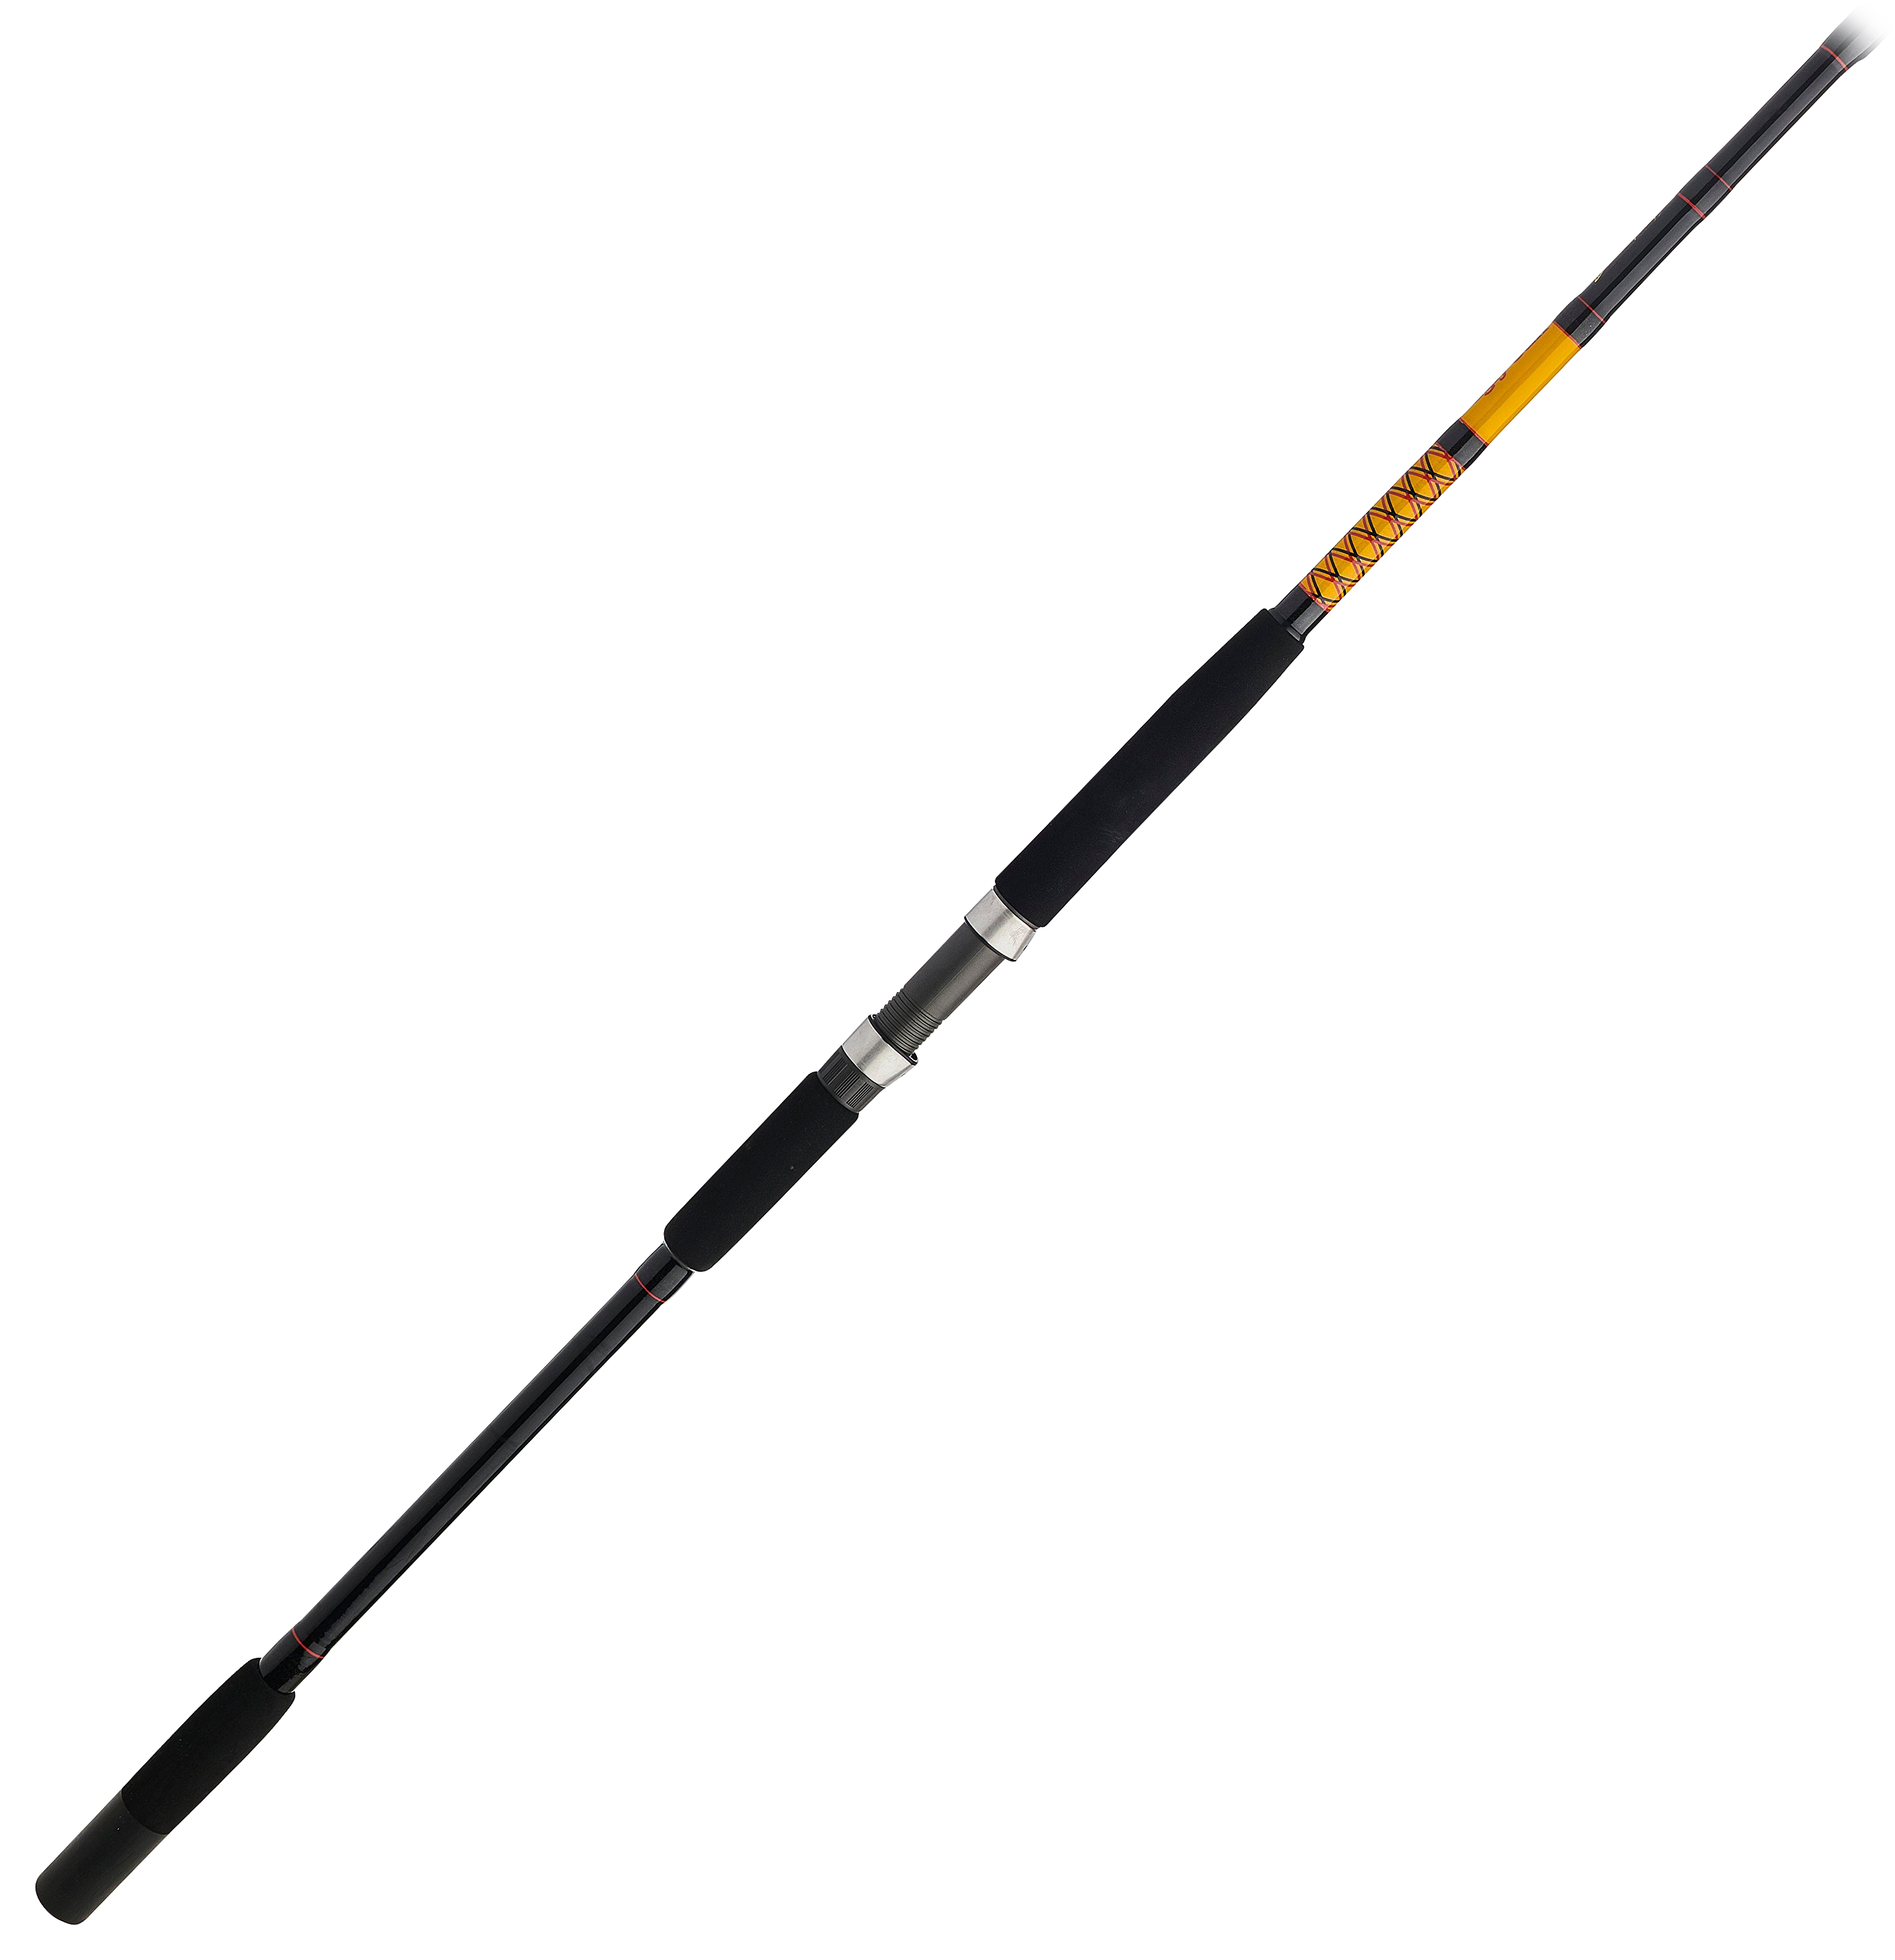 Offshore Angler Ocean Master 6'6 Saltwater Fishing Rod Casting